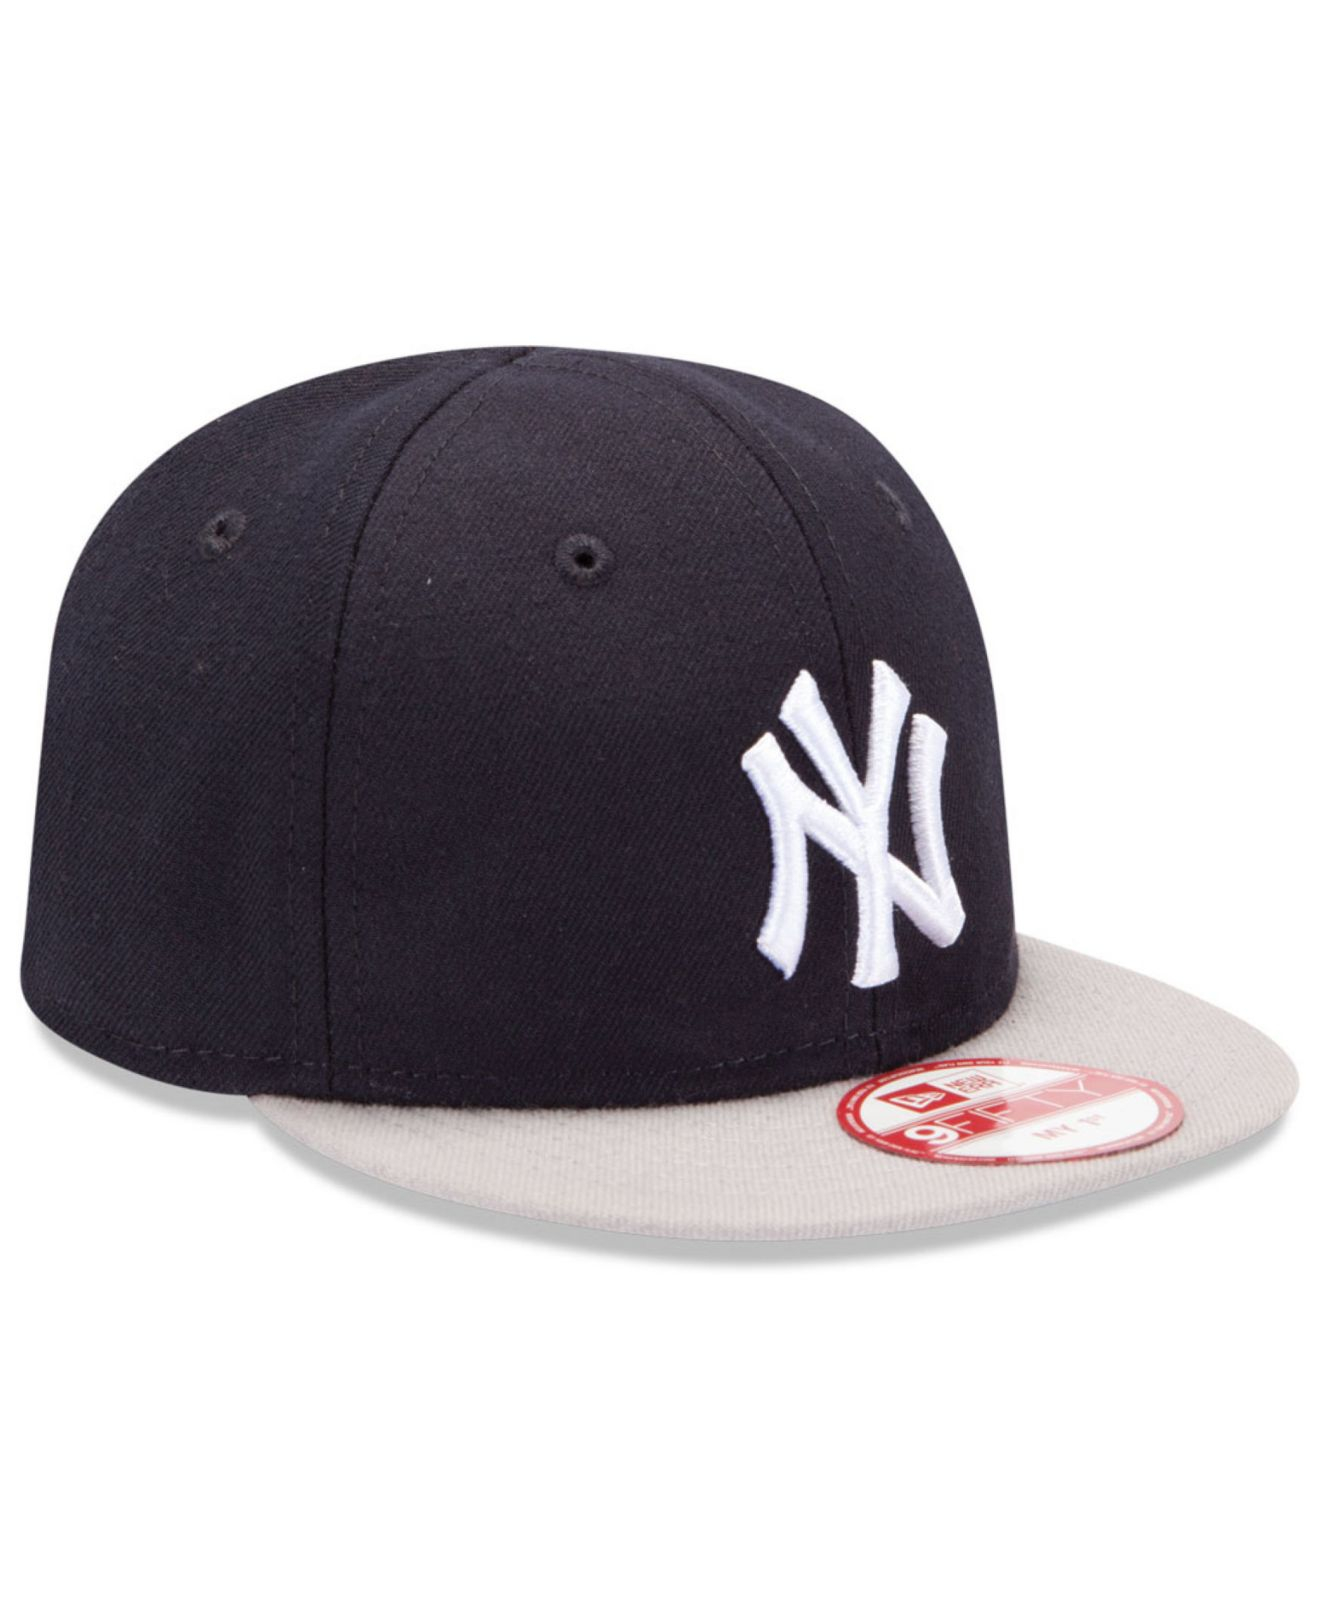 Lyst - Ktz Babies' New York Yankees 9fifty Snapback Cap in Blue